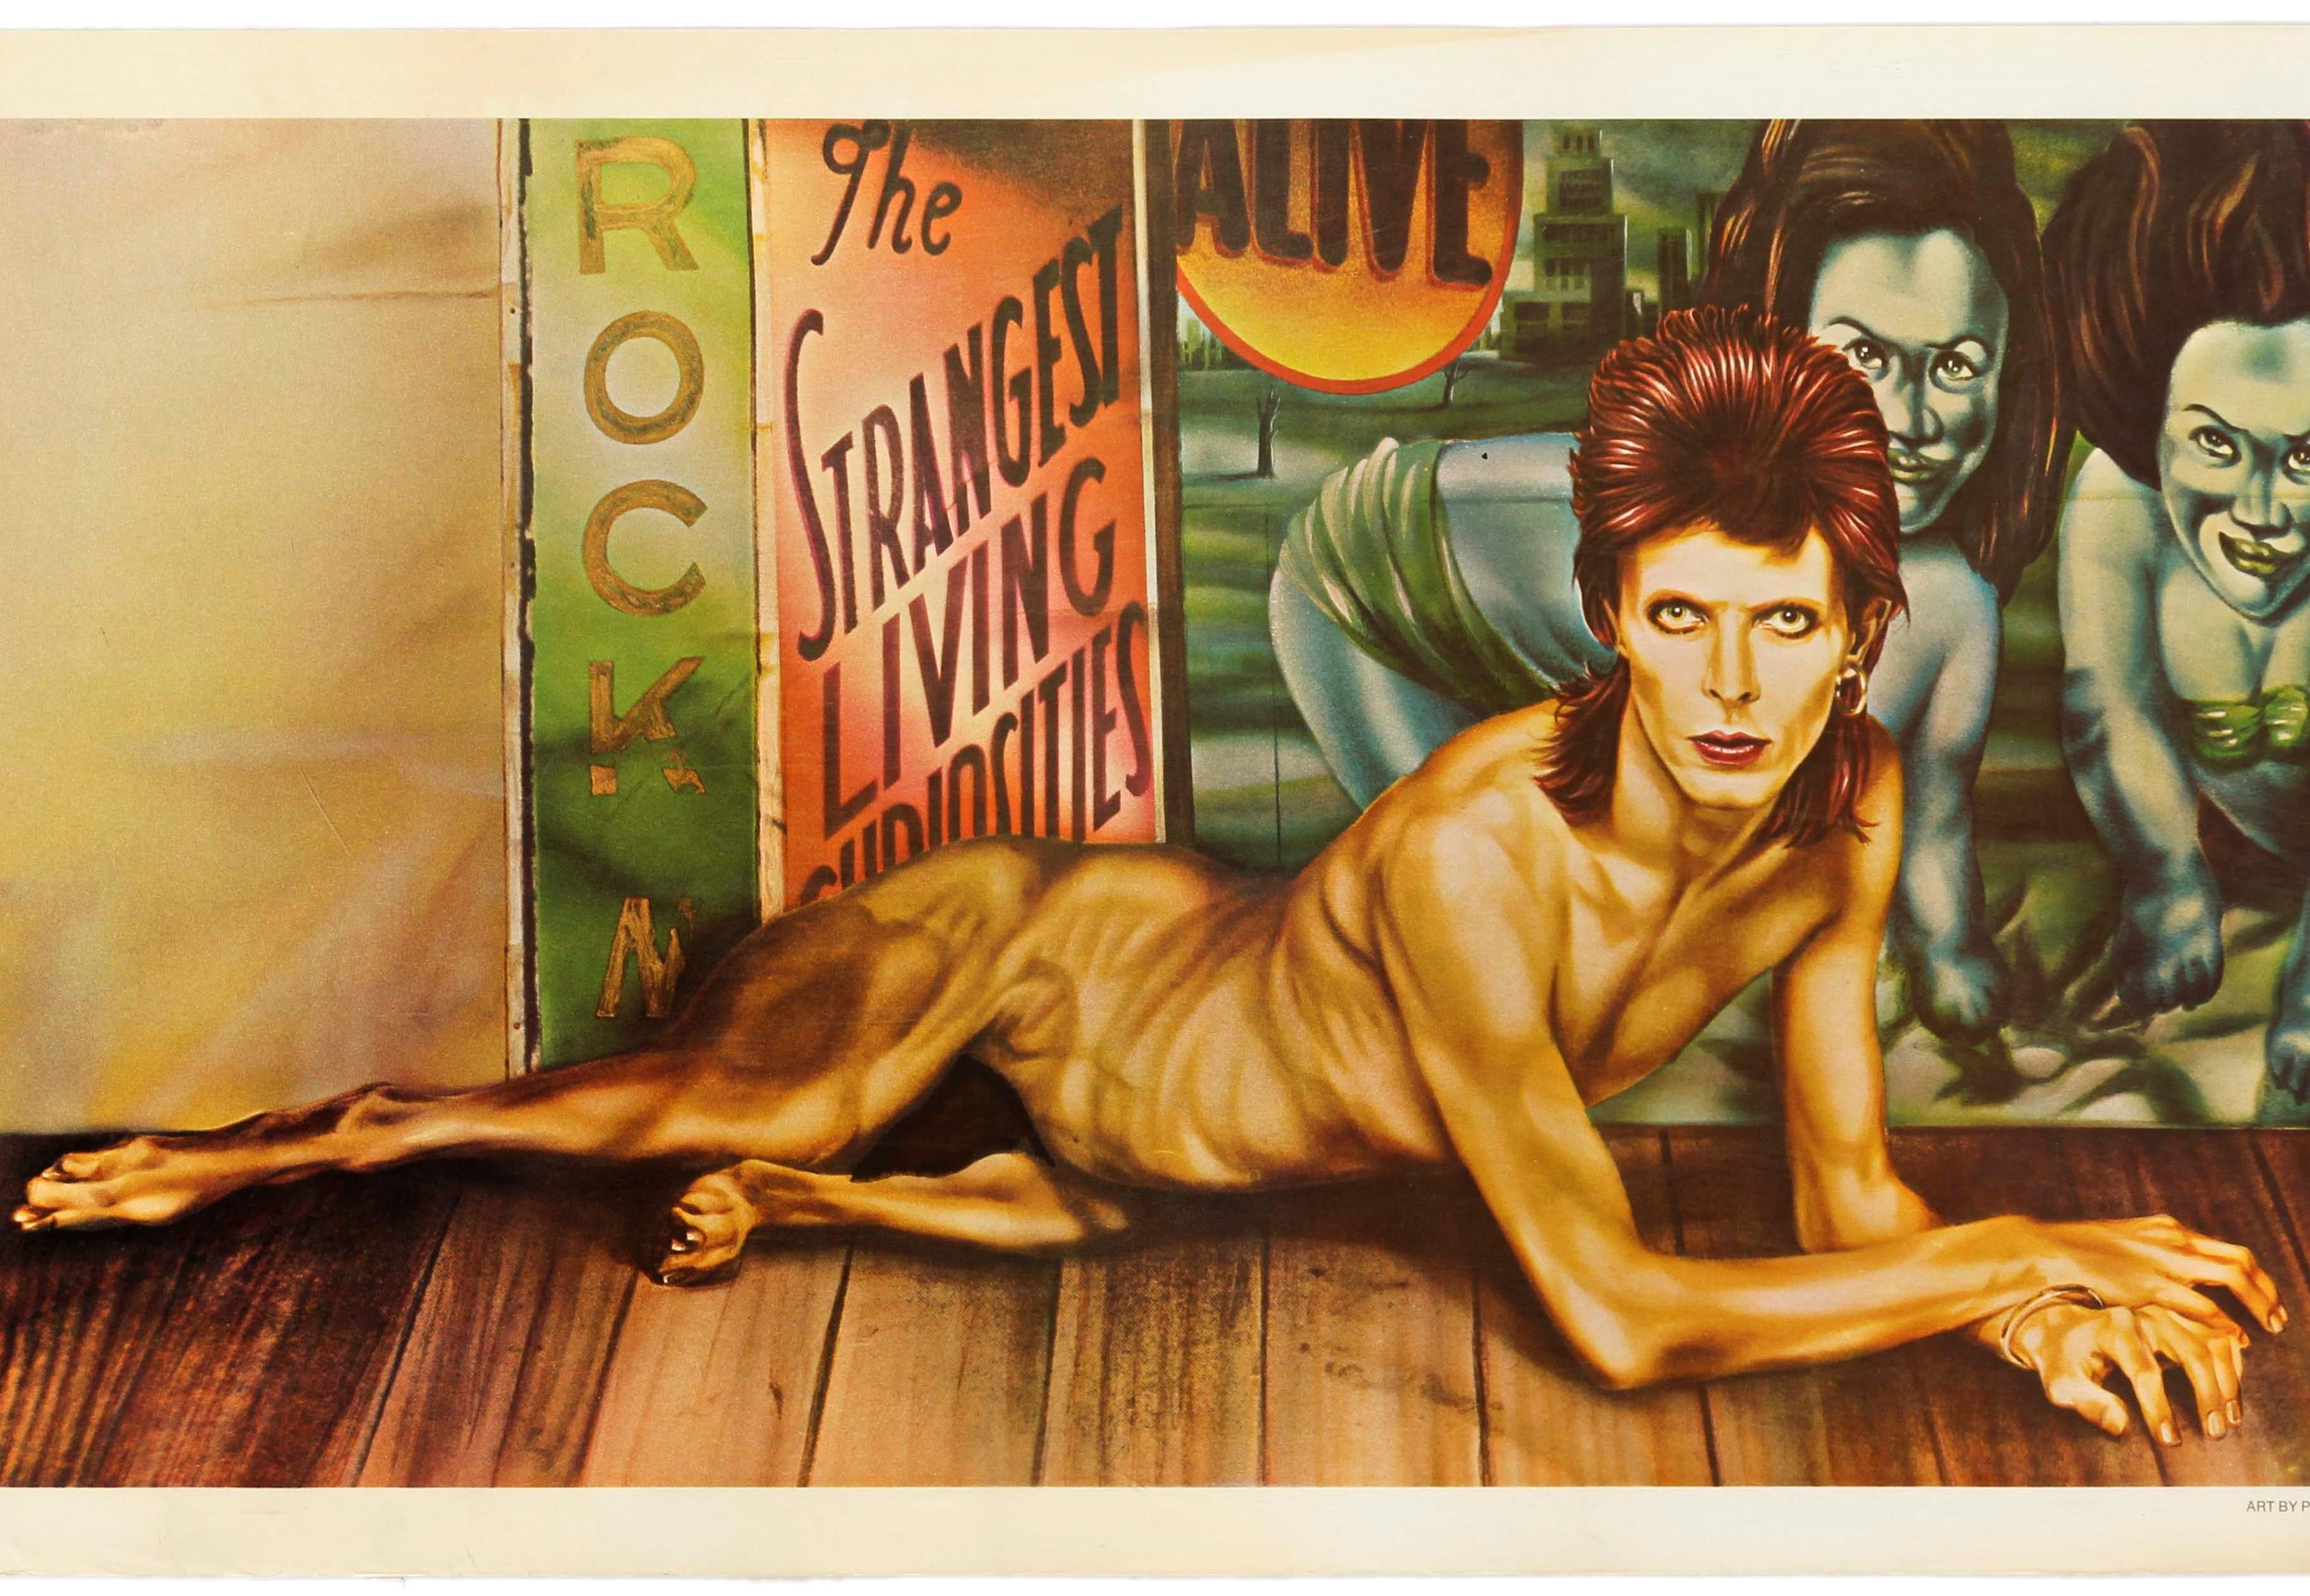 Original Vintage Poster David Bowie Diamond Dogs Iconic Rock Music Album Design  - Print by Guy Peellaert